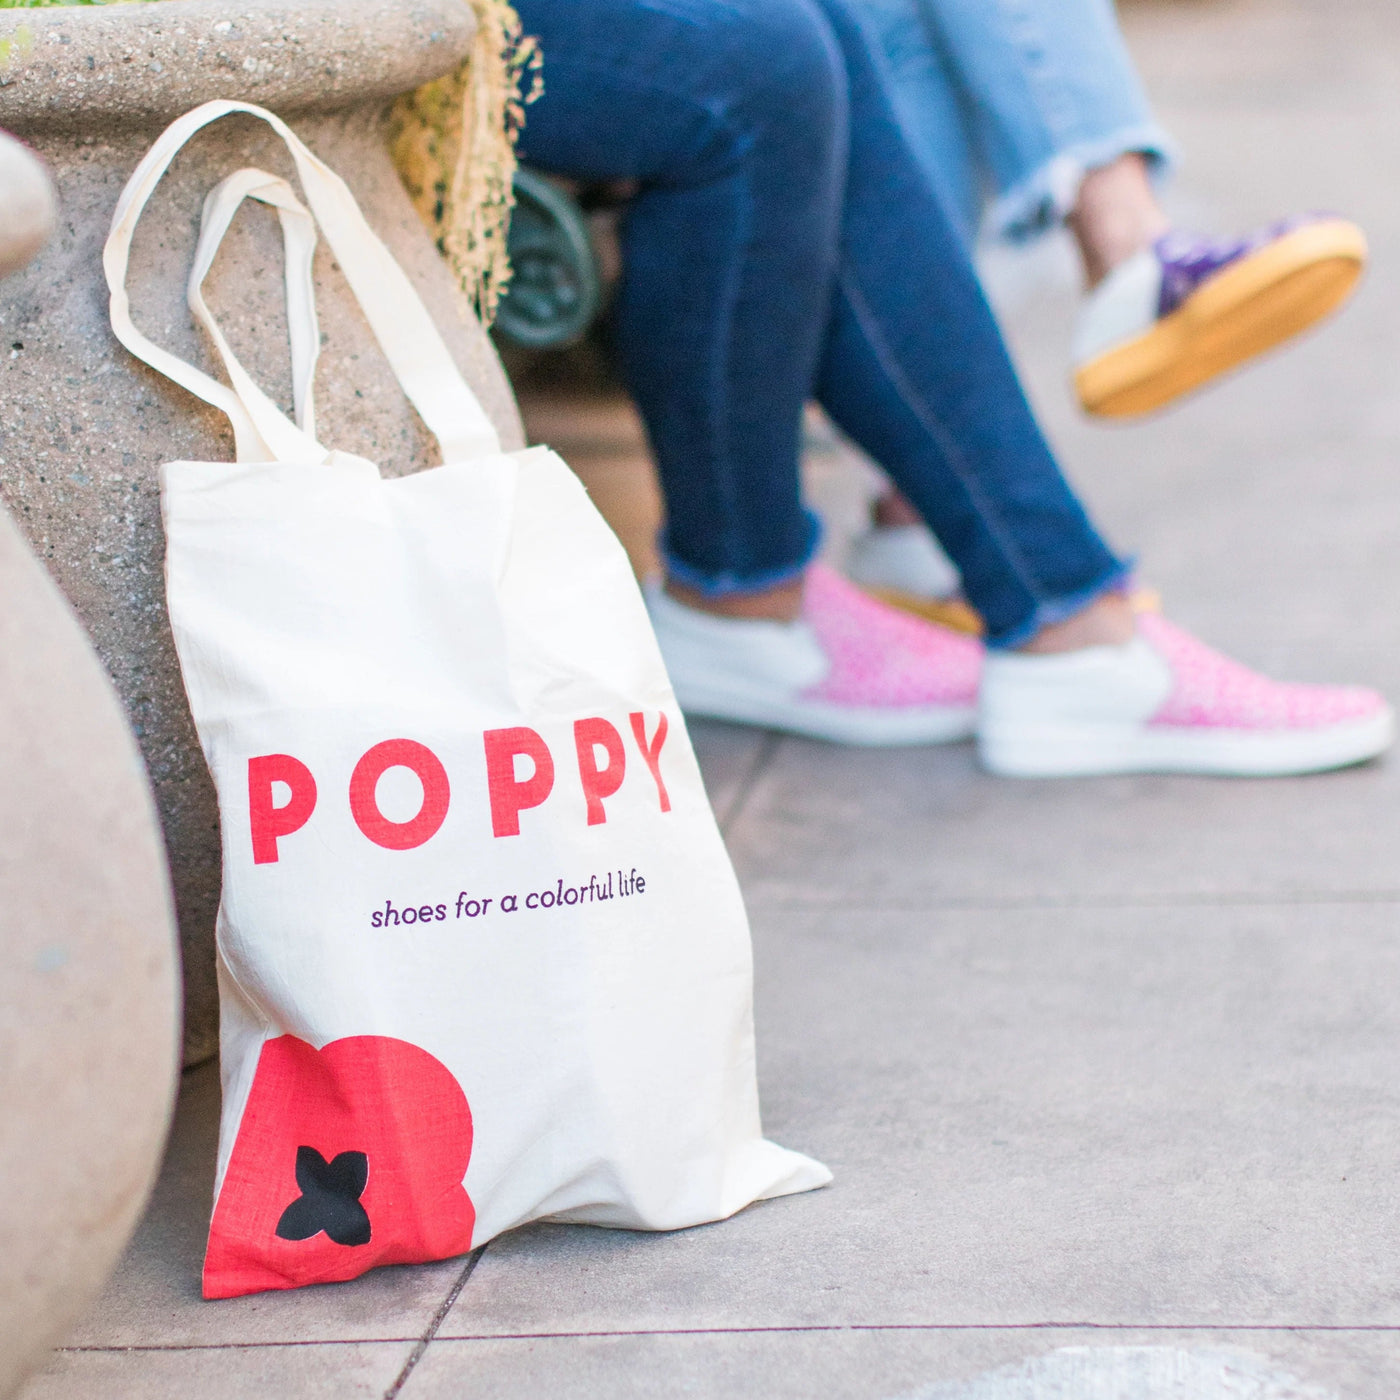 Poppy Tote Bag by Poppy Shoes